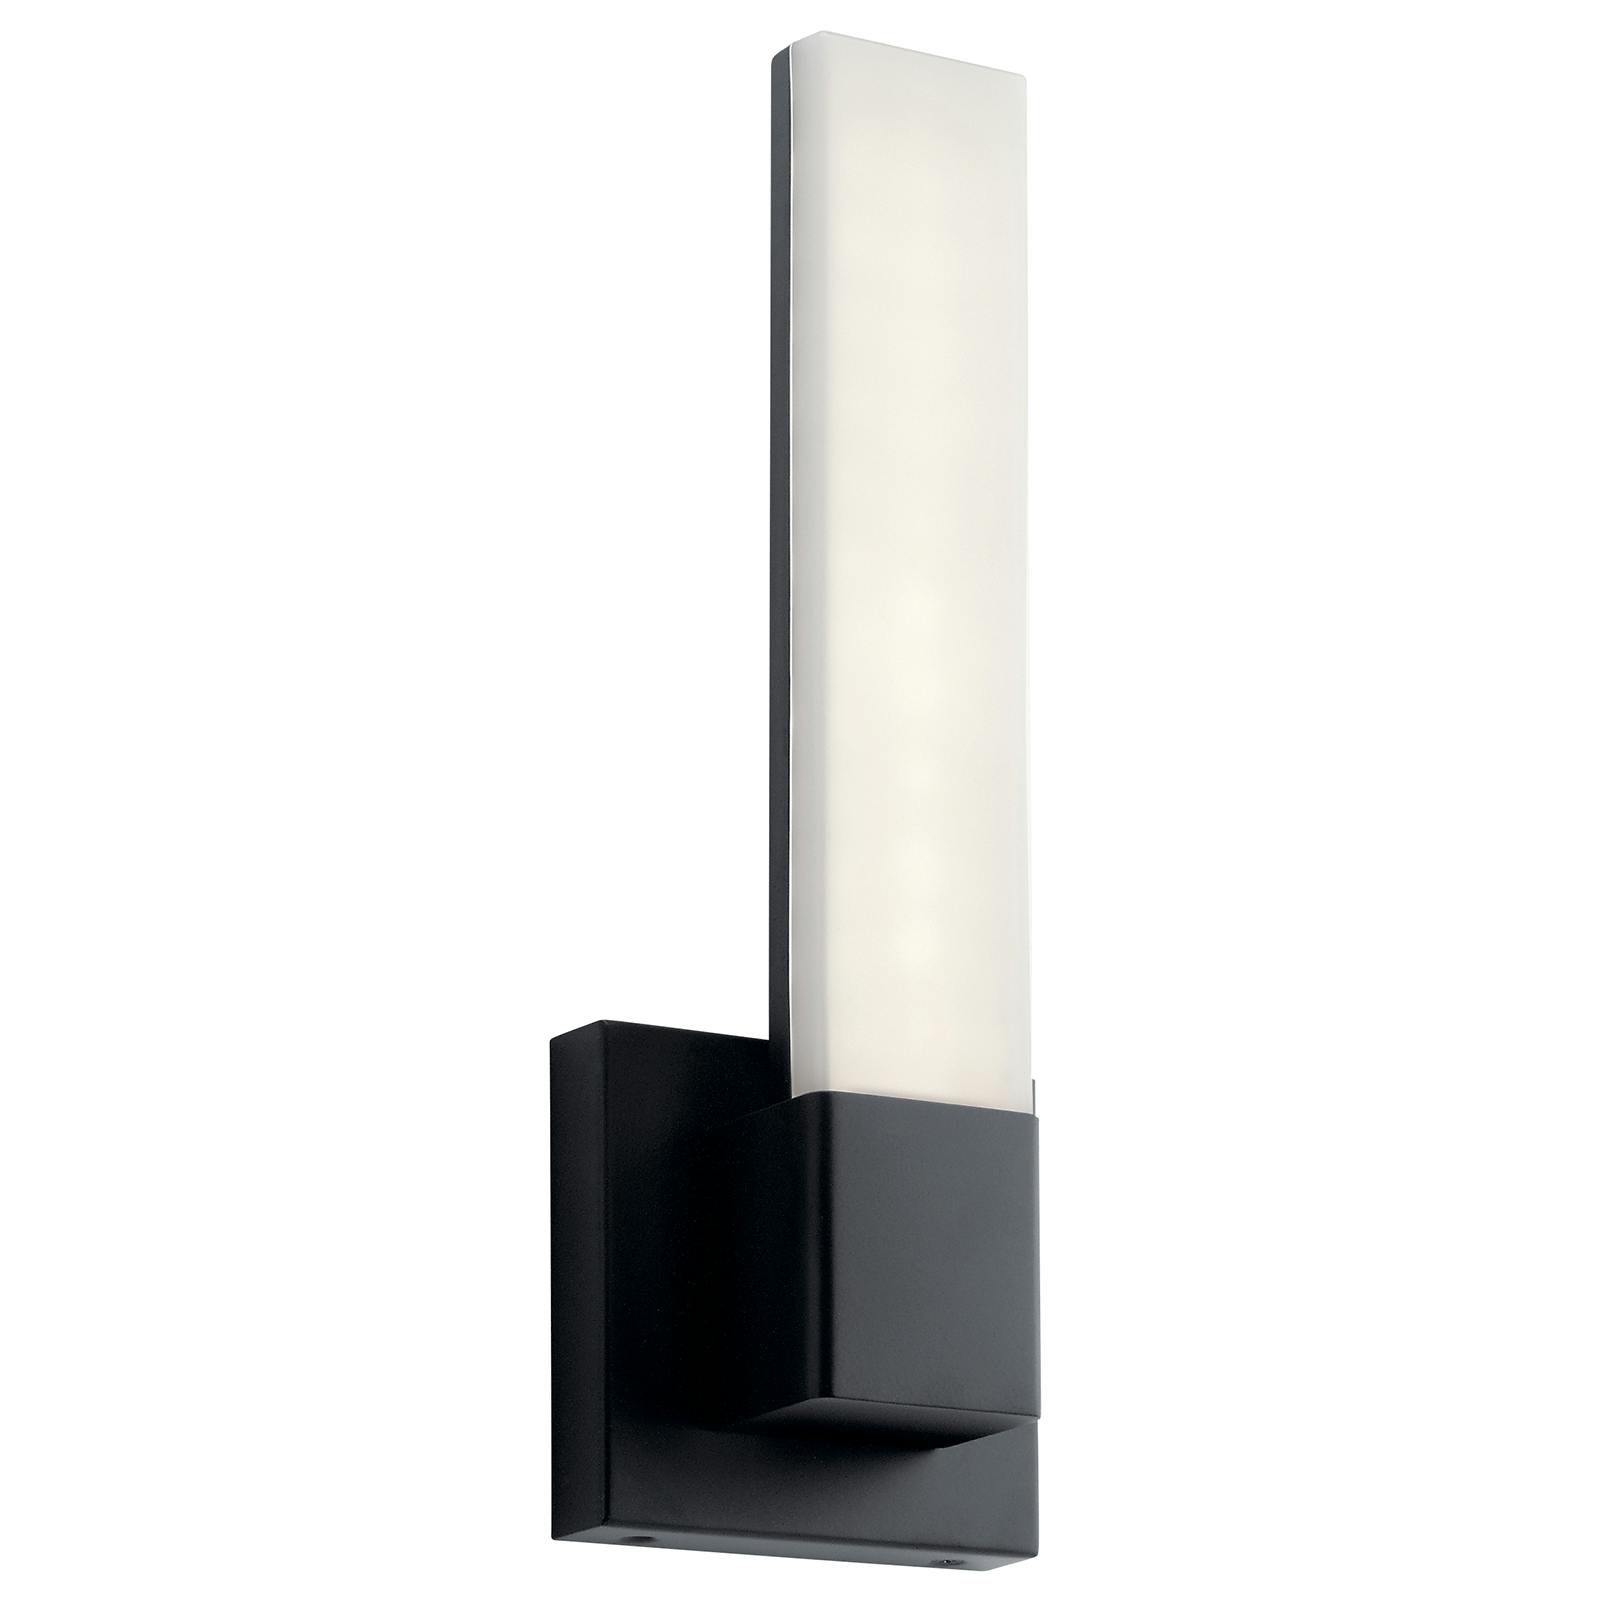 Neltev LED Sconce with Down Light Black on a white background